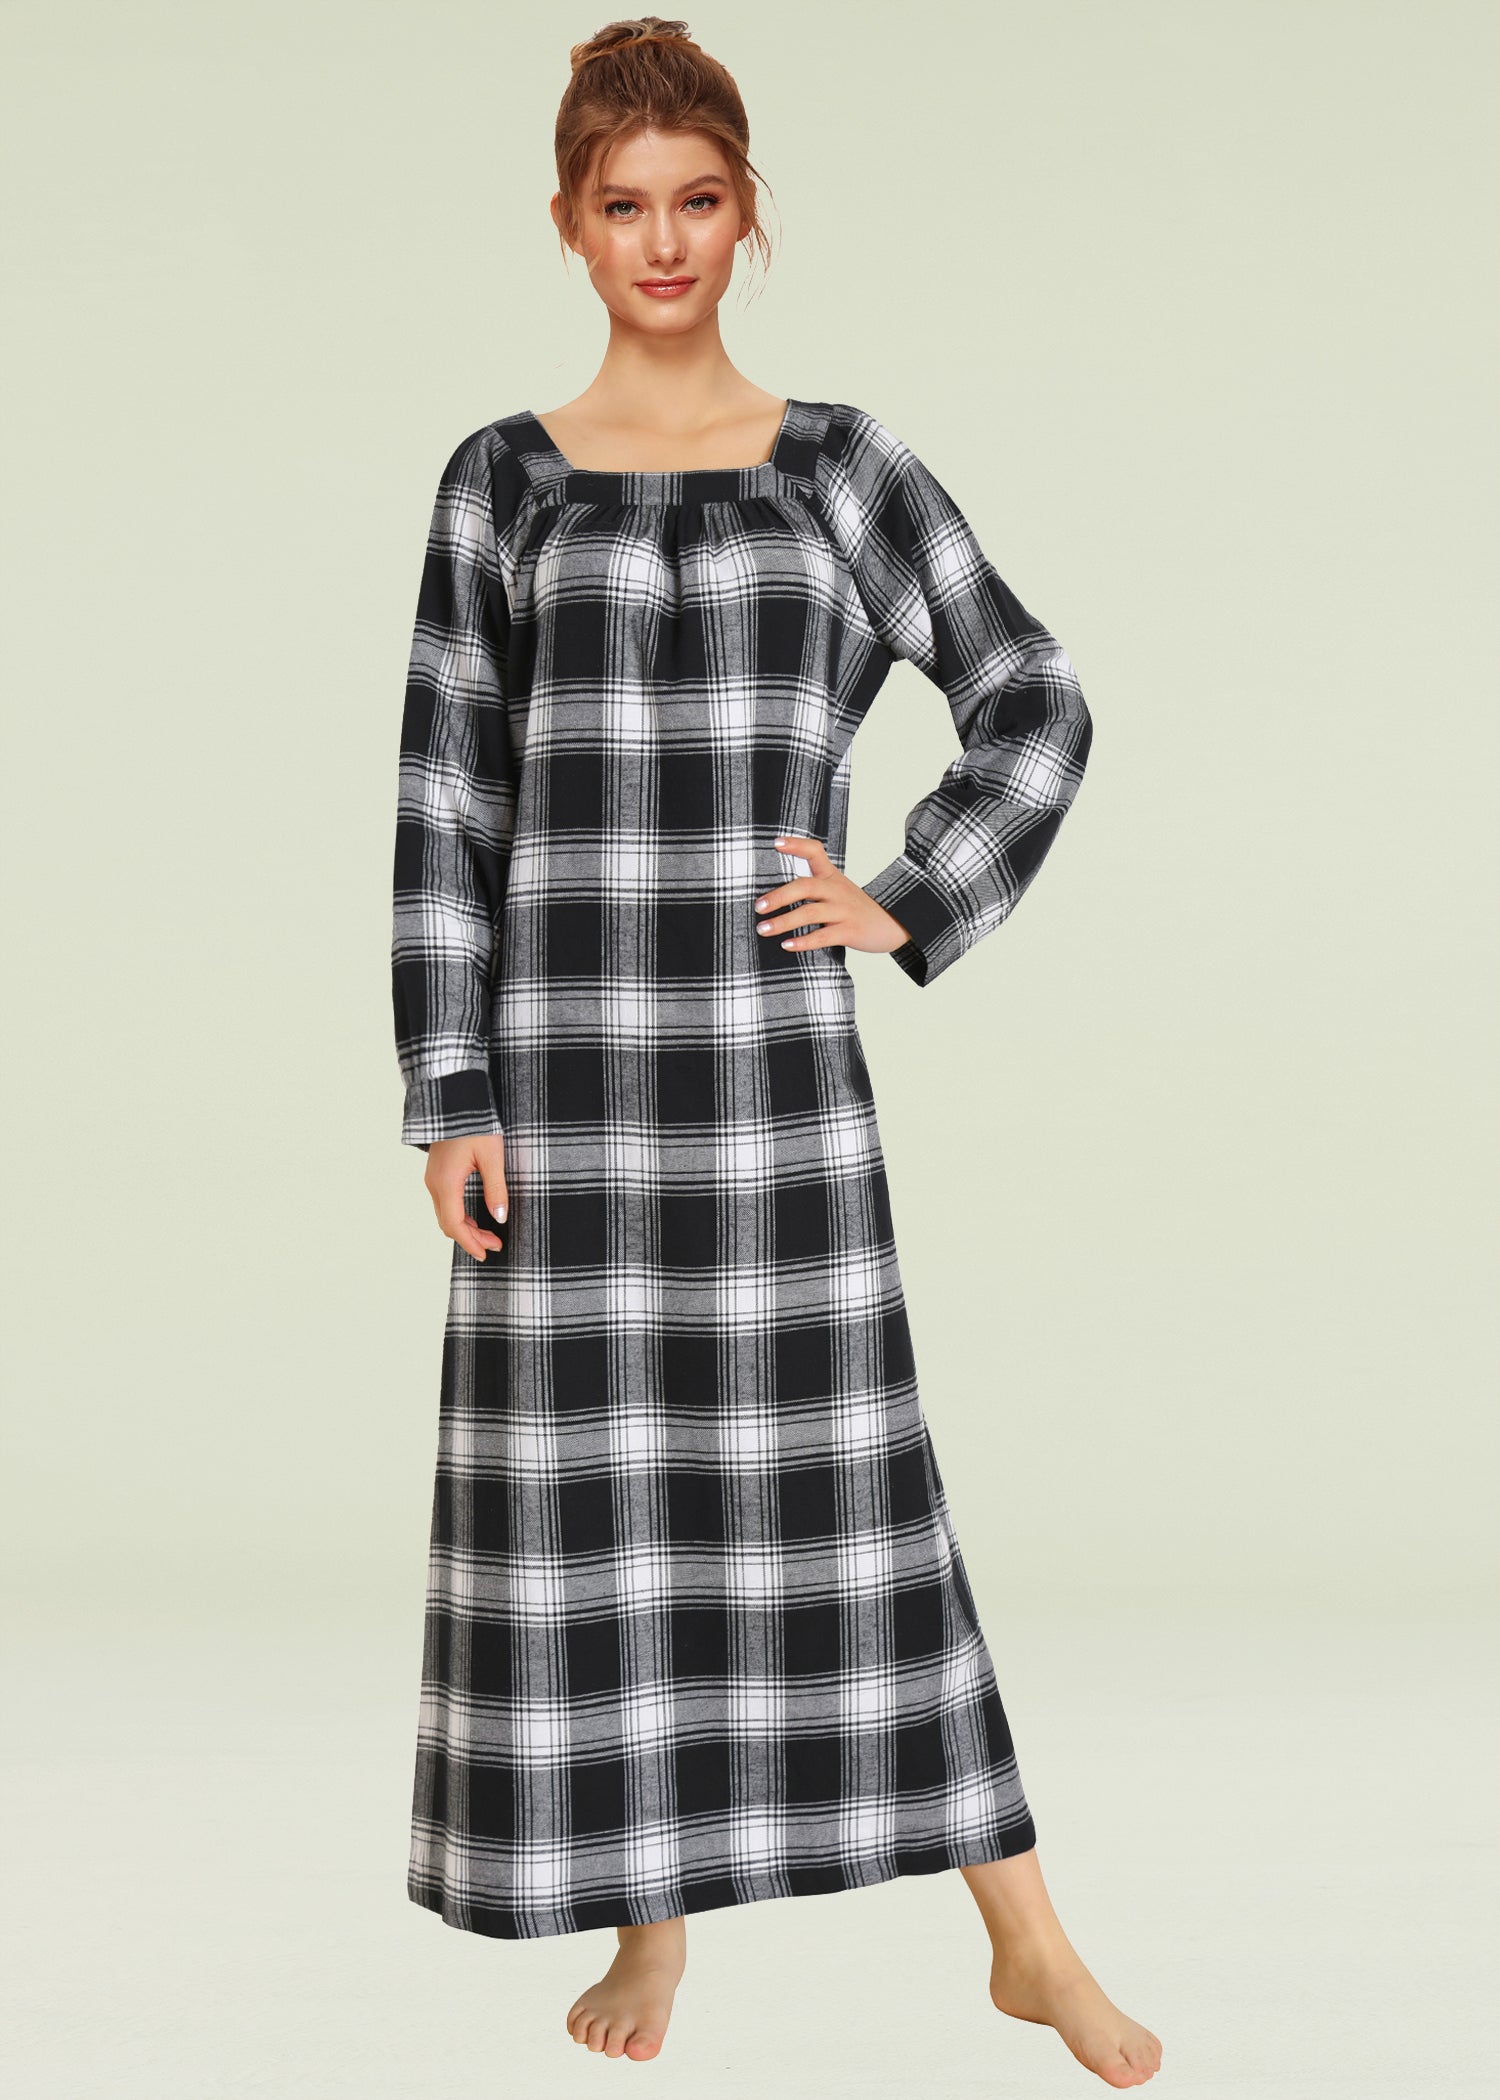 Women's Flannel Nightgowns & Nightshirts